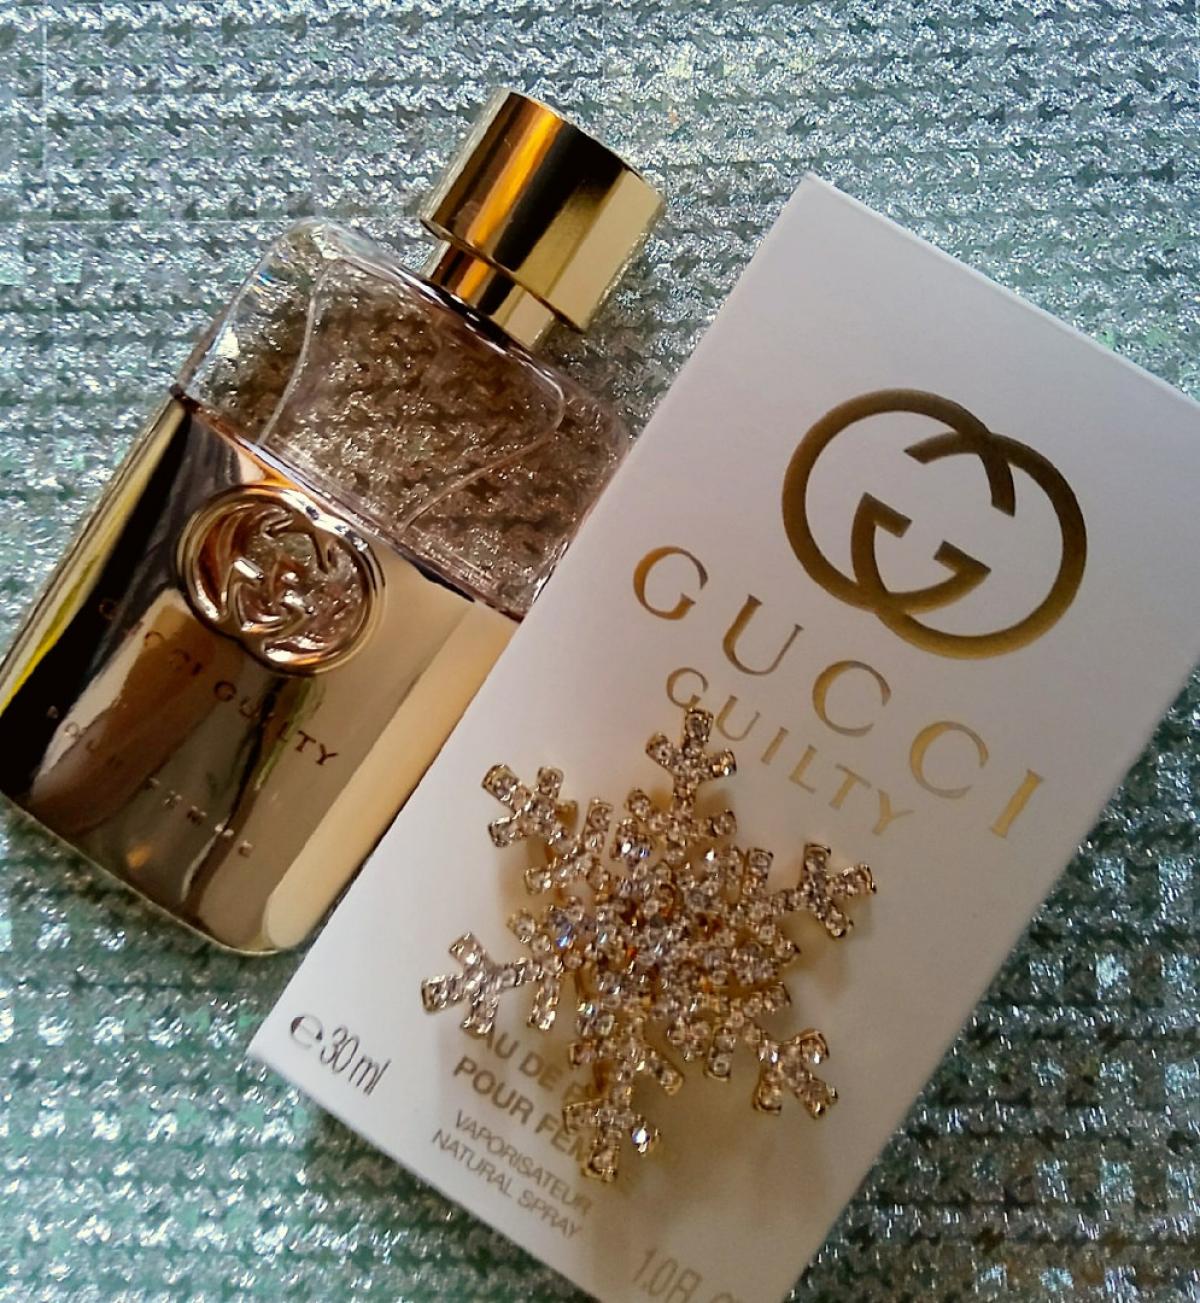 Gucci Guilty Eau de Parfum Gucci perfume a novo fragrância Feminino 2019